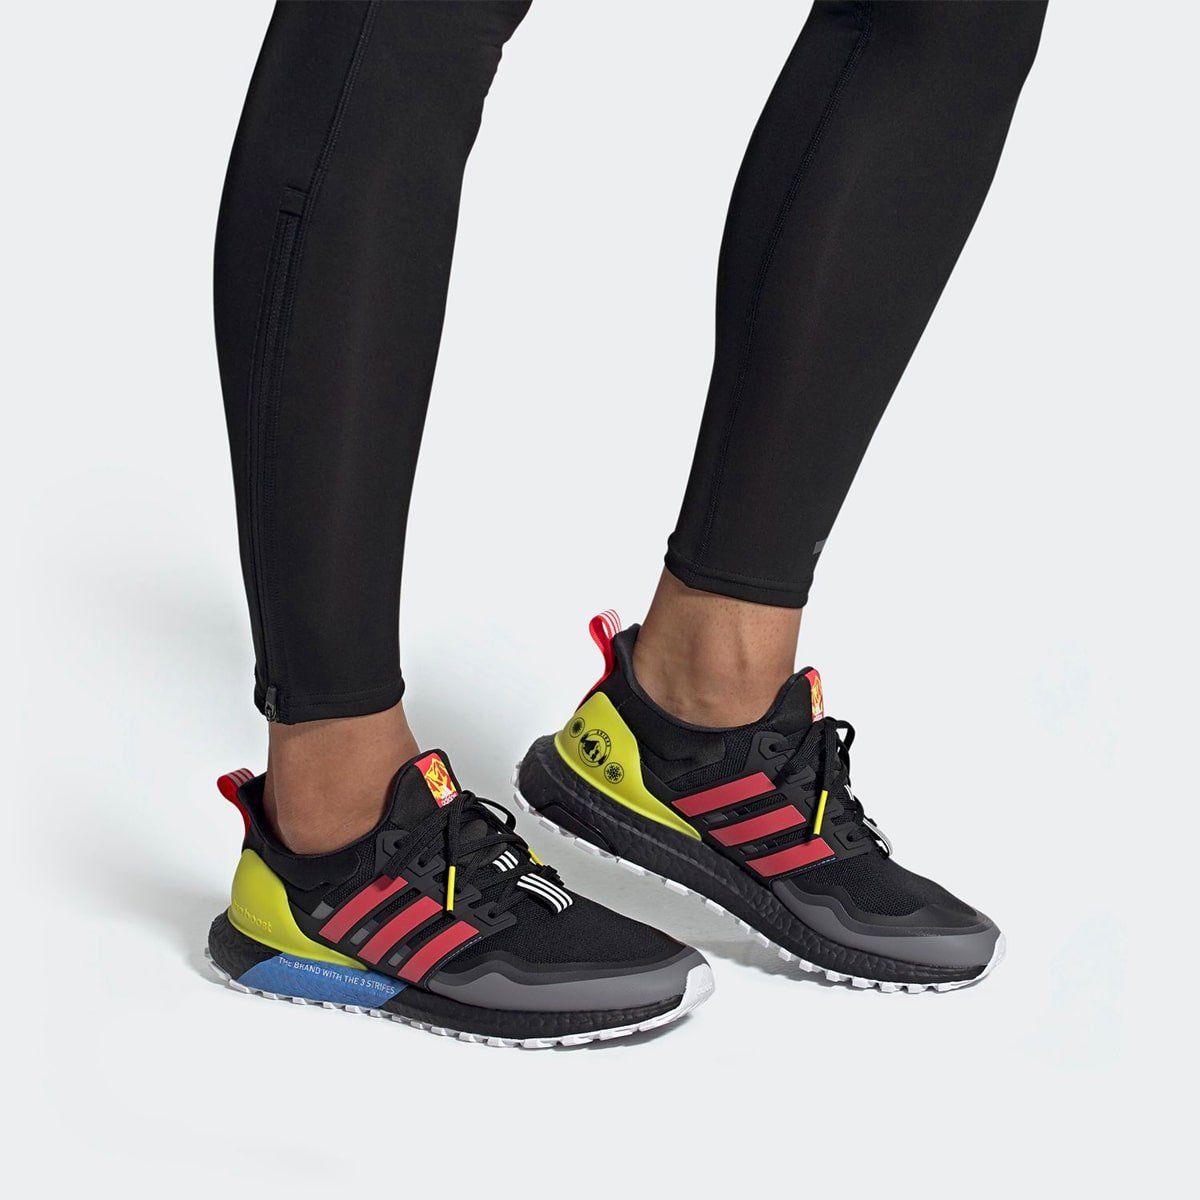 Adidas All Terrain Boost United Kingdom, SAVE - horiconphoenix.com